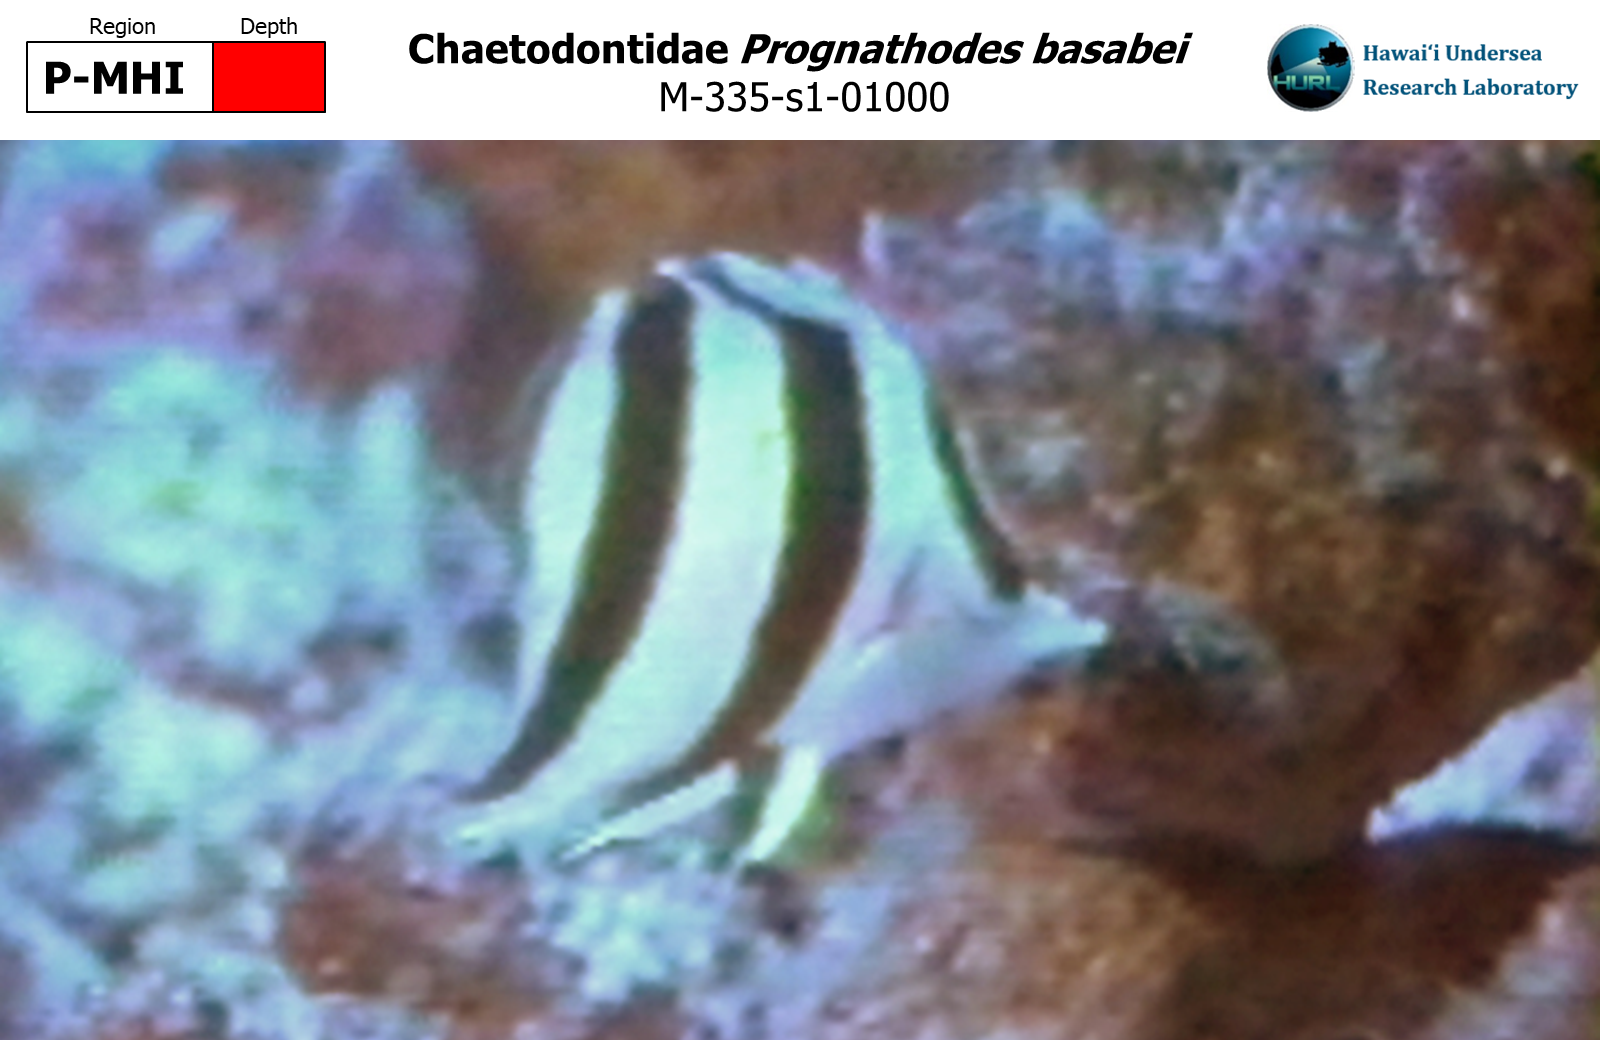 Prognathodes basabei